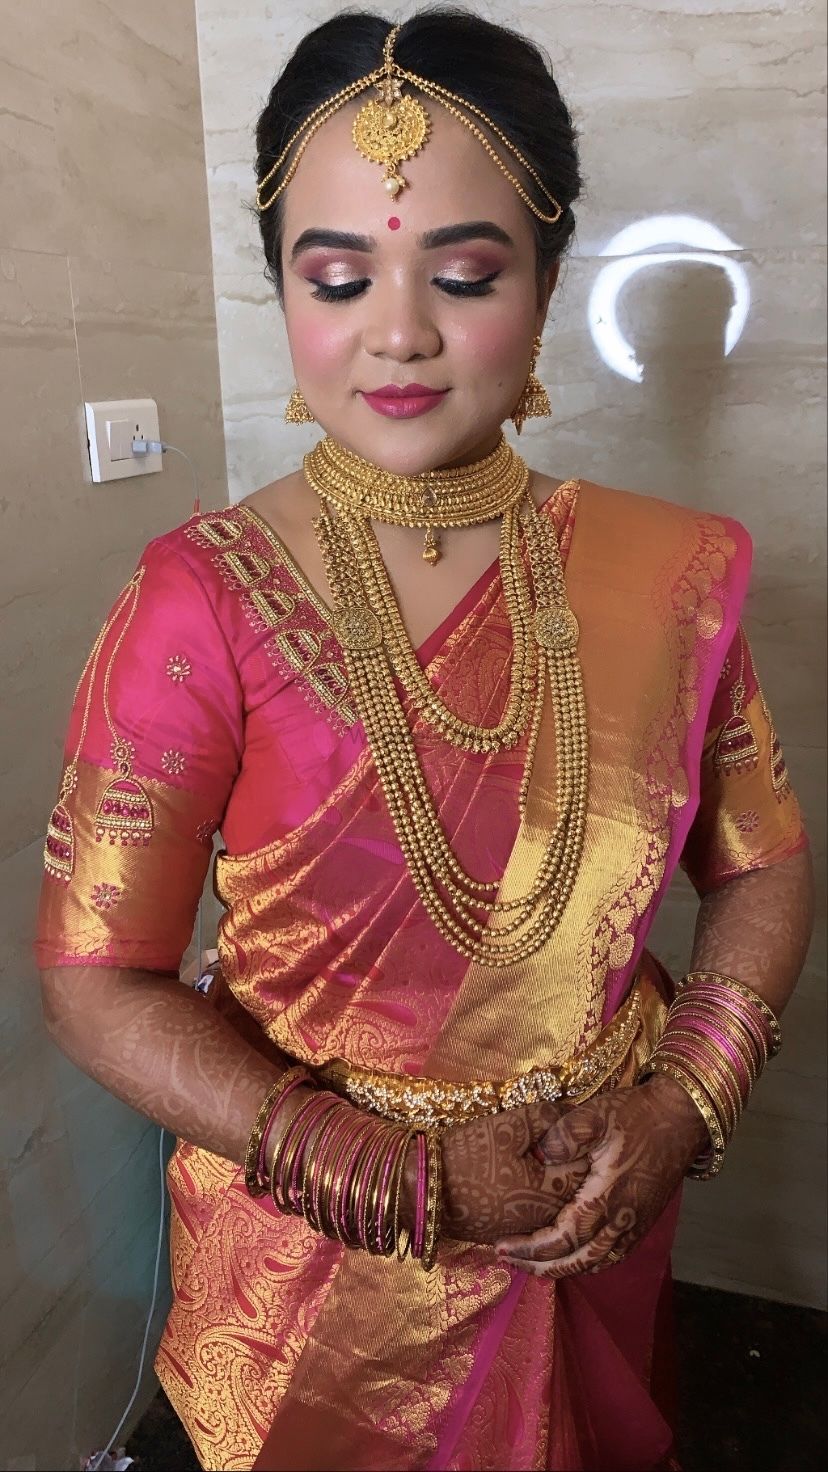 Photo From Swathi Lakshman wedding  - By Makeup by Shreajha